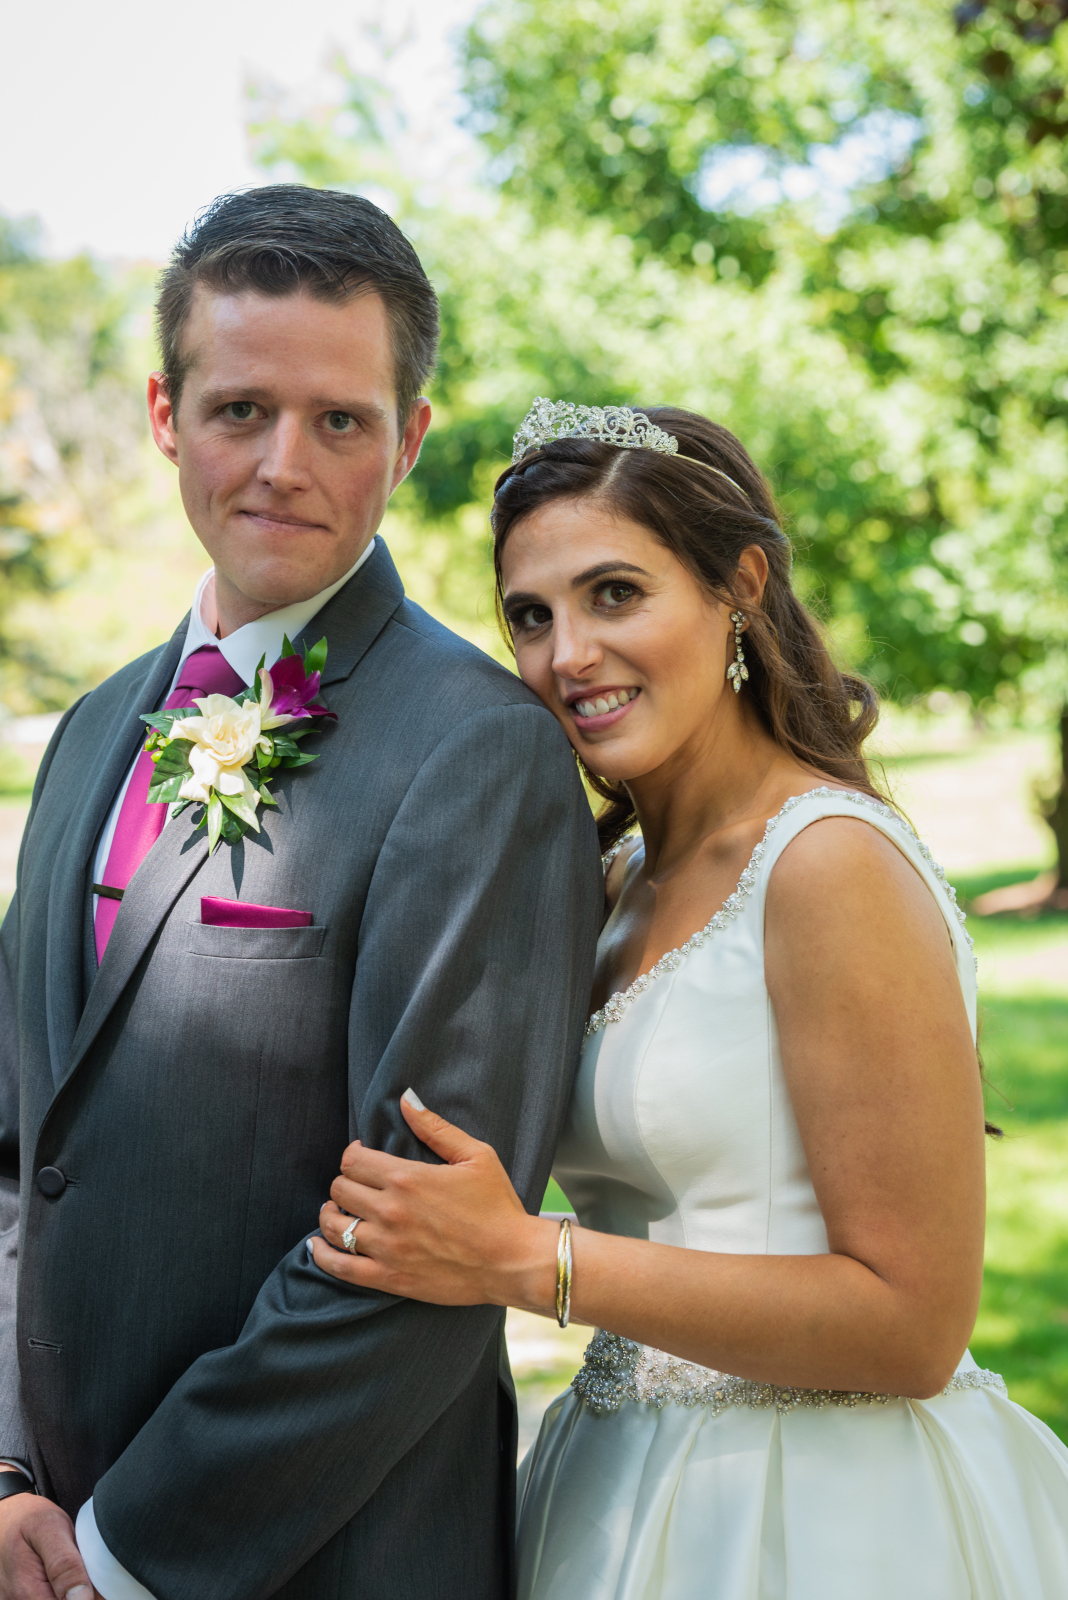 Bride and groom wedding portrait, couple portrait, green, nature, trees, sweet wedding ceremony at Crocker Park, Westlake OH